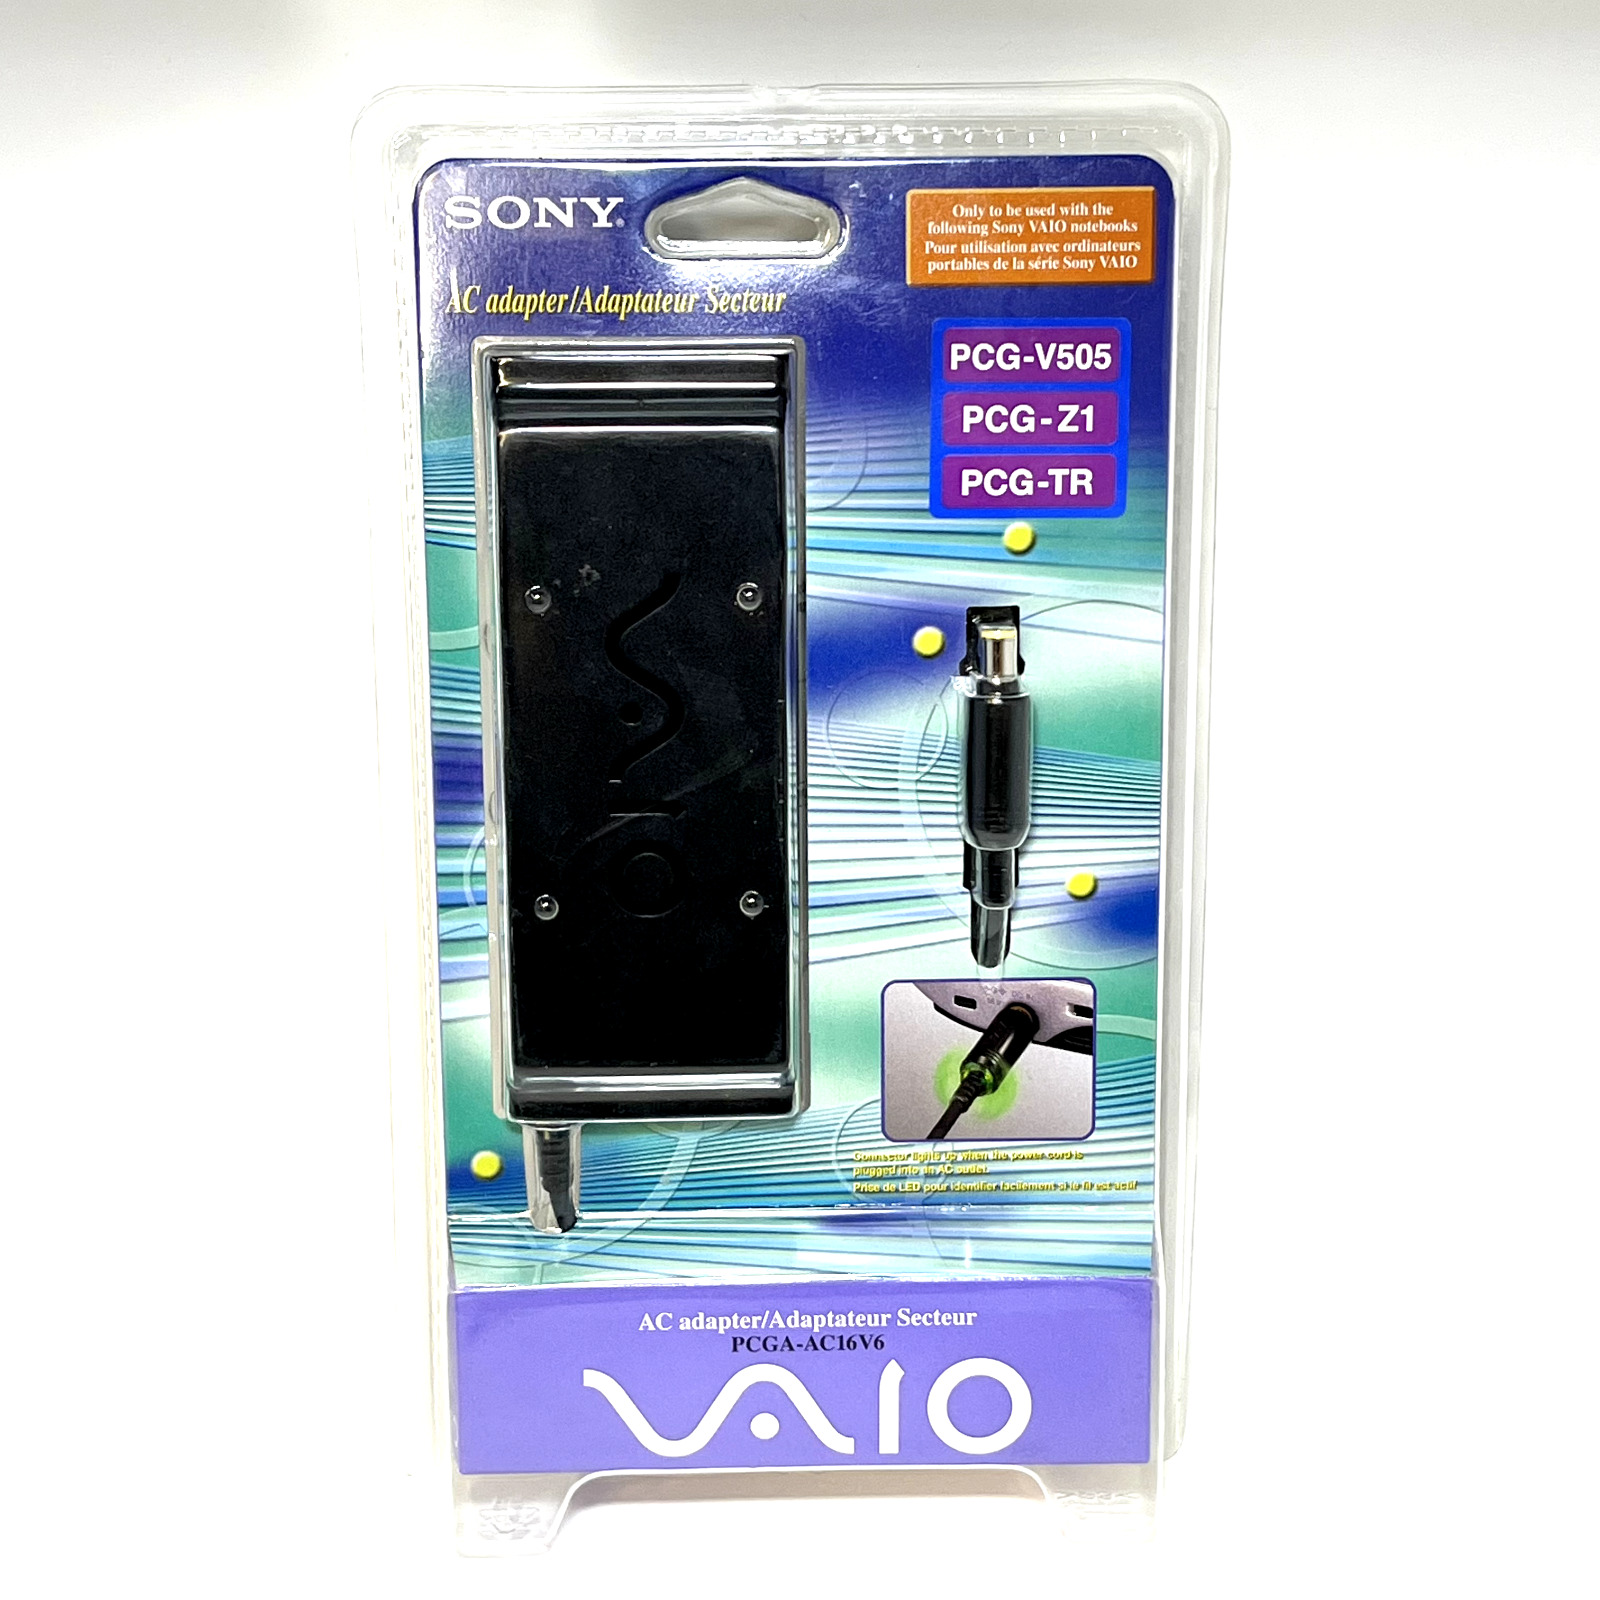 New Sony VAIO AC Adapter Notebook Computer PCG-V505 PCG-Z1 PCG-TR PCGA-AC16V6